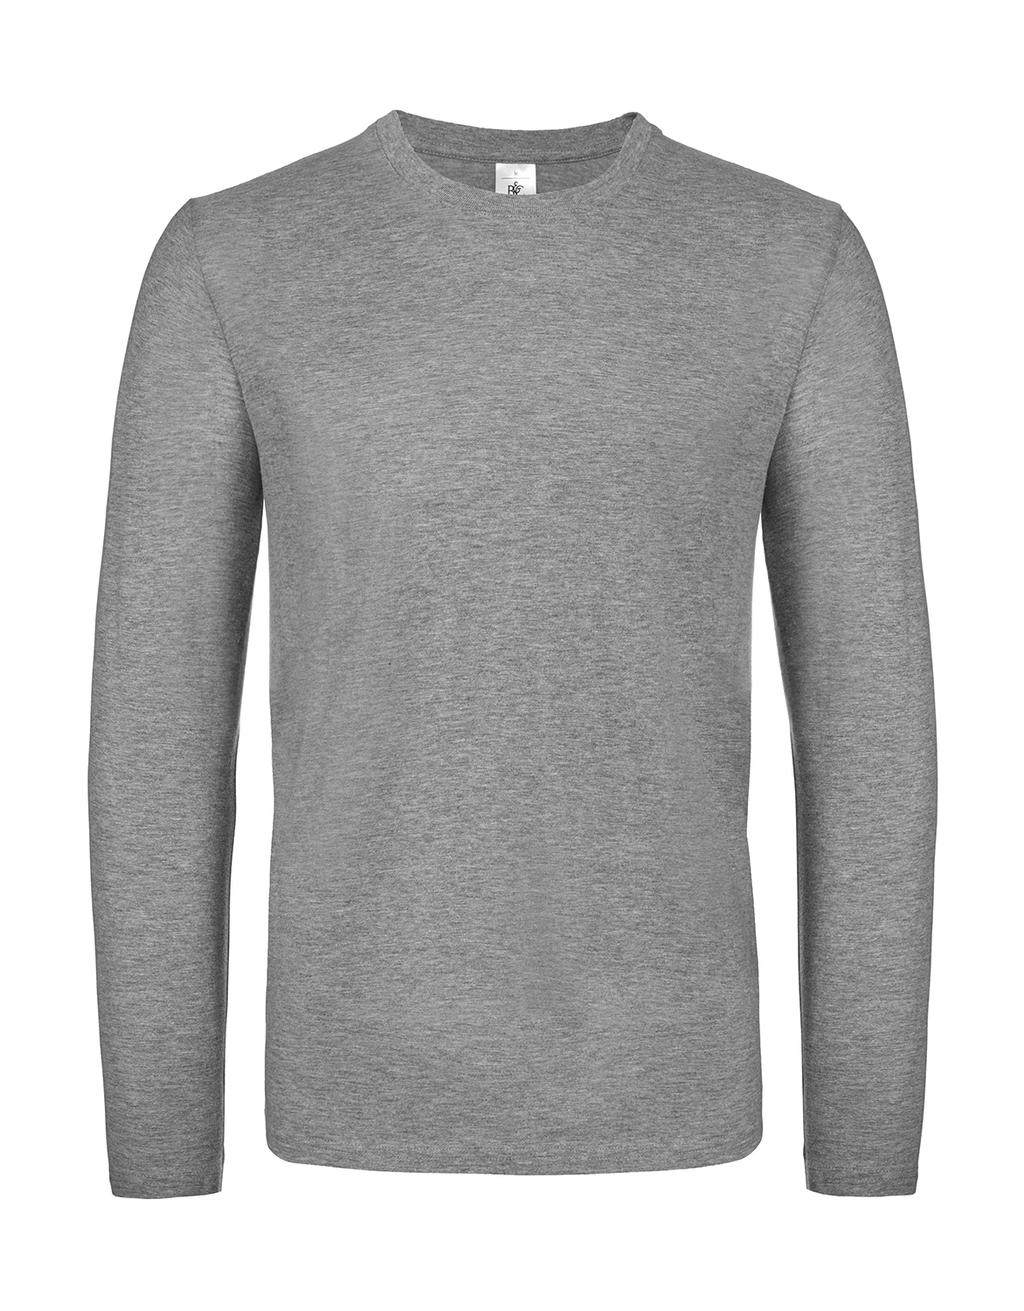 Tričko s dlhými rukávmi #E150 - sport grey